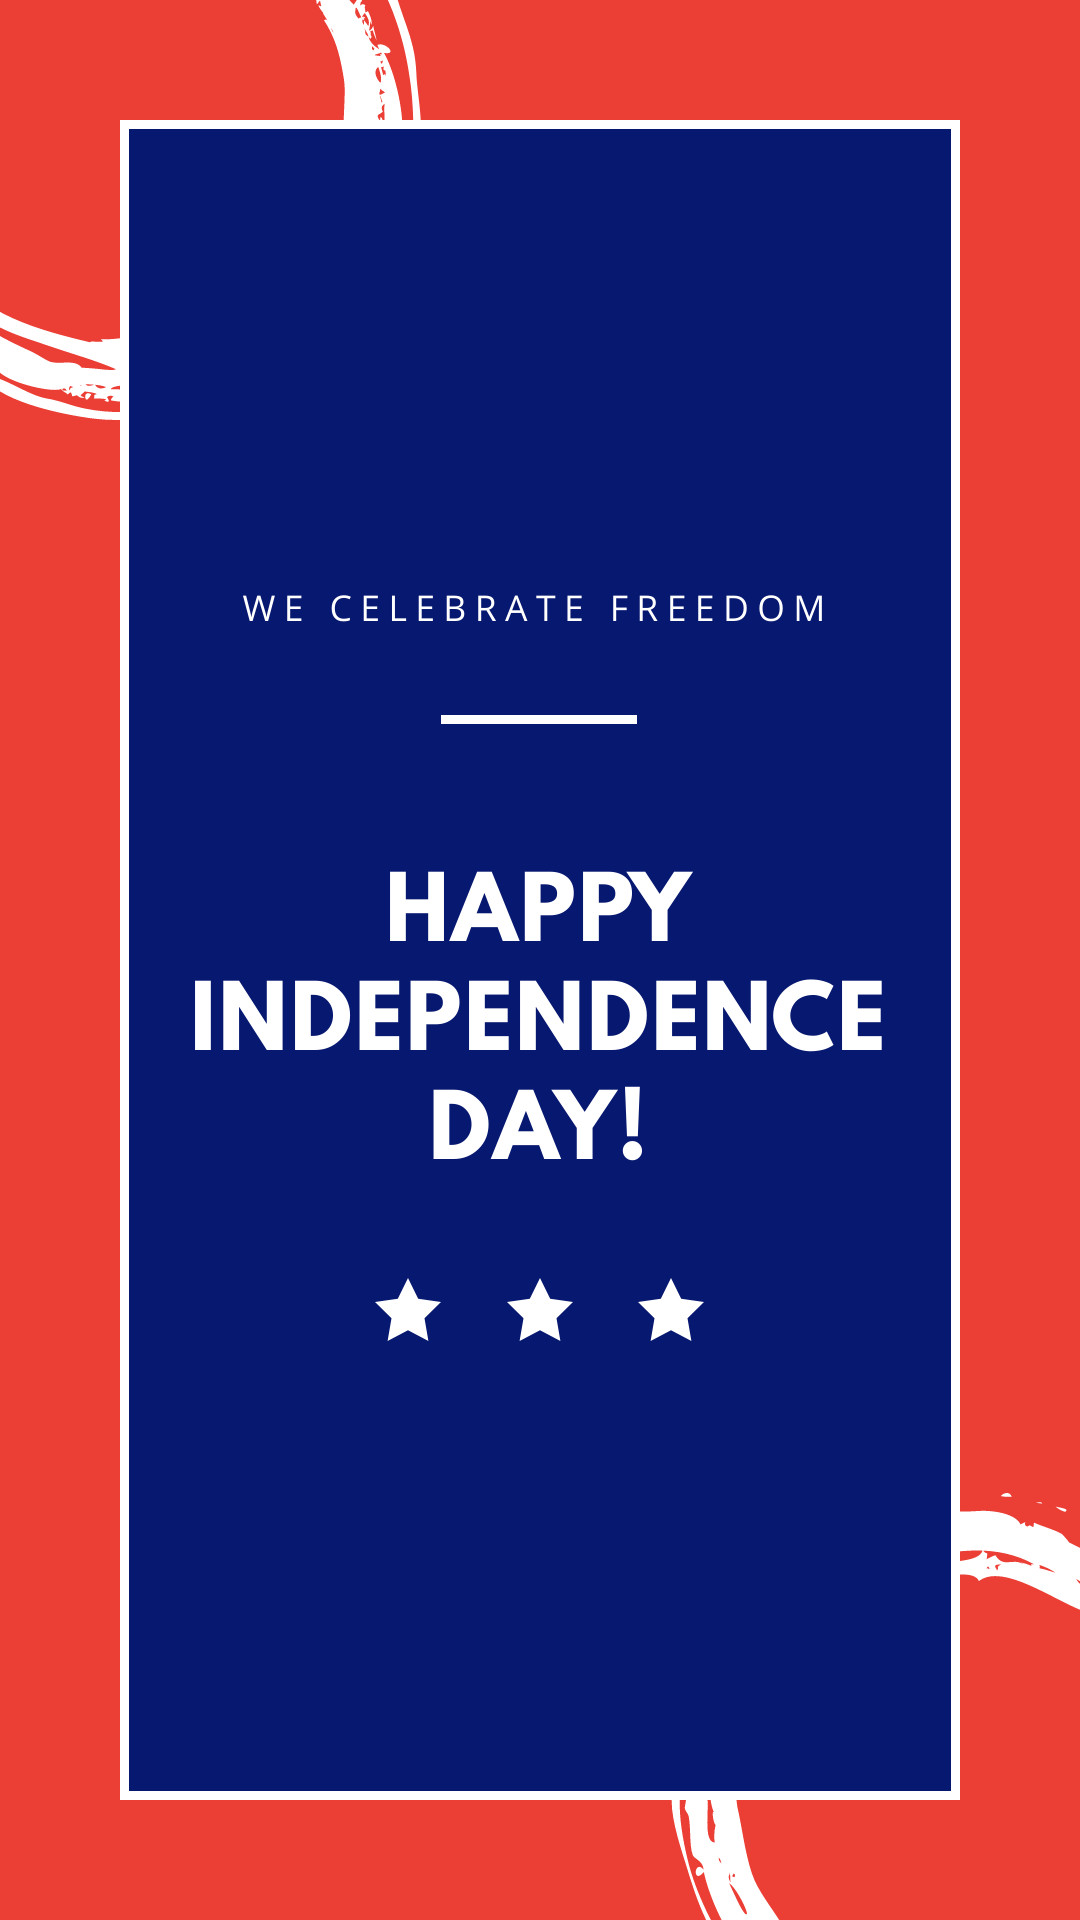 We Celebrate Freedom on Independence Day